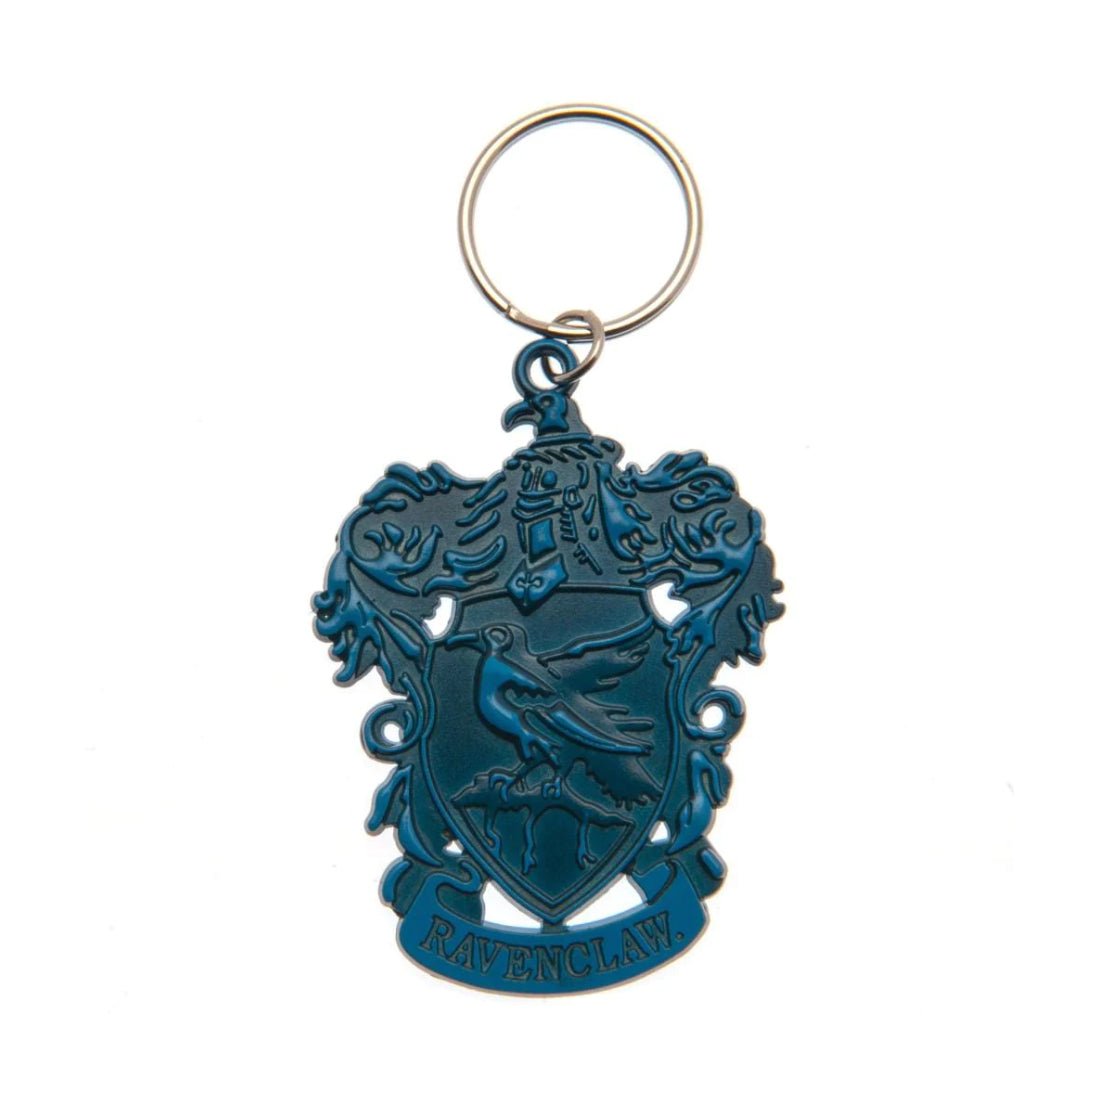 Harry Potter - Ravenclaw Crest Metal Keychain - أكسسوار - Store 974 | ستور ٩٧٤